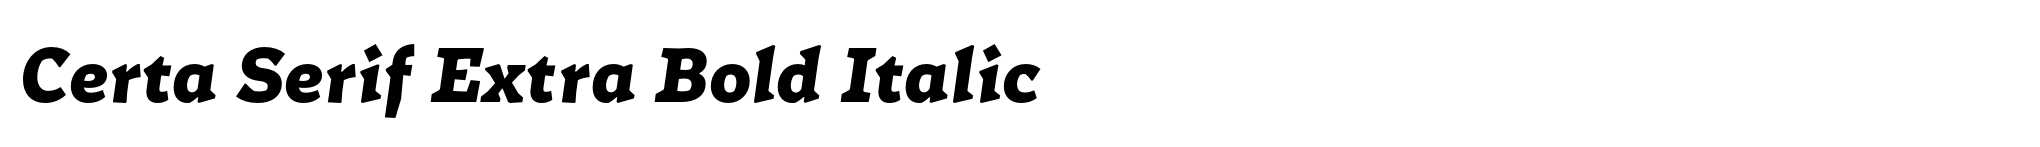 Certa Serif Extra Bold Italic image